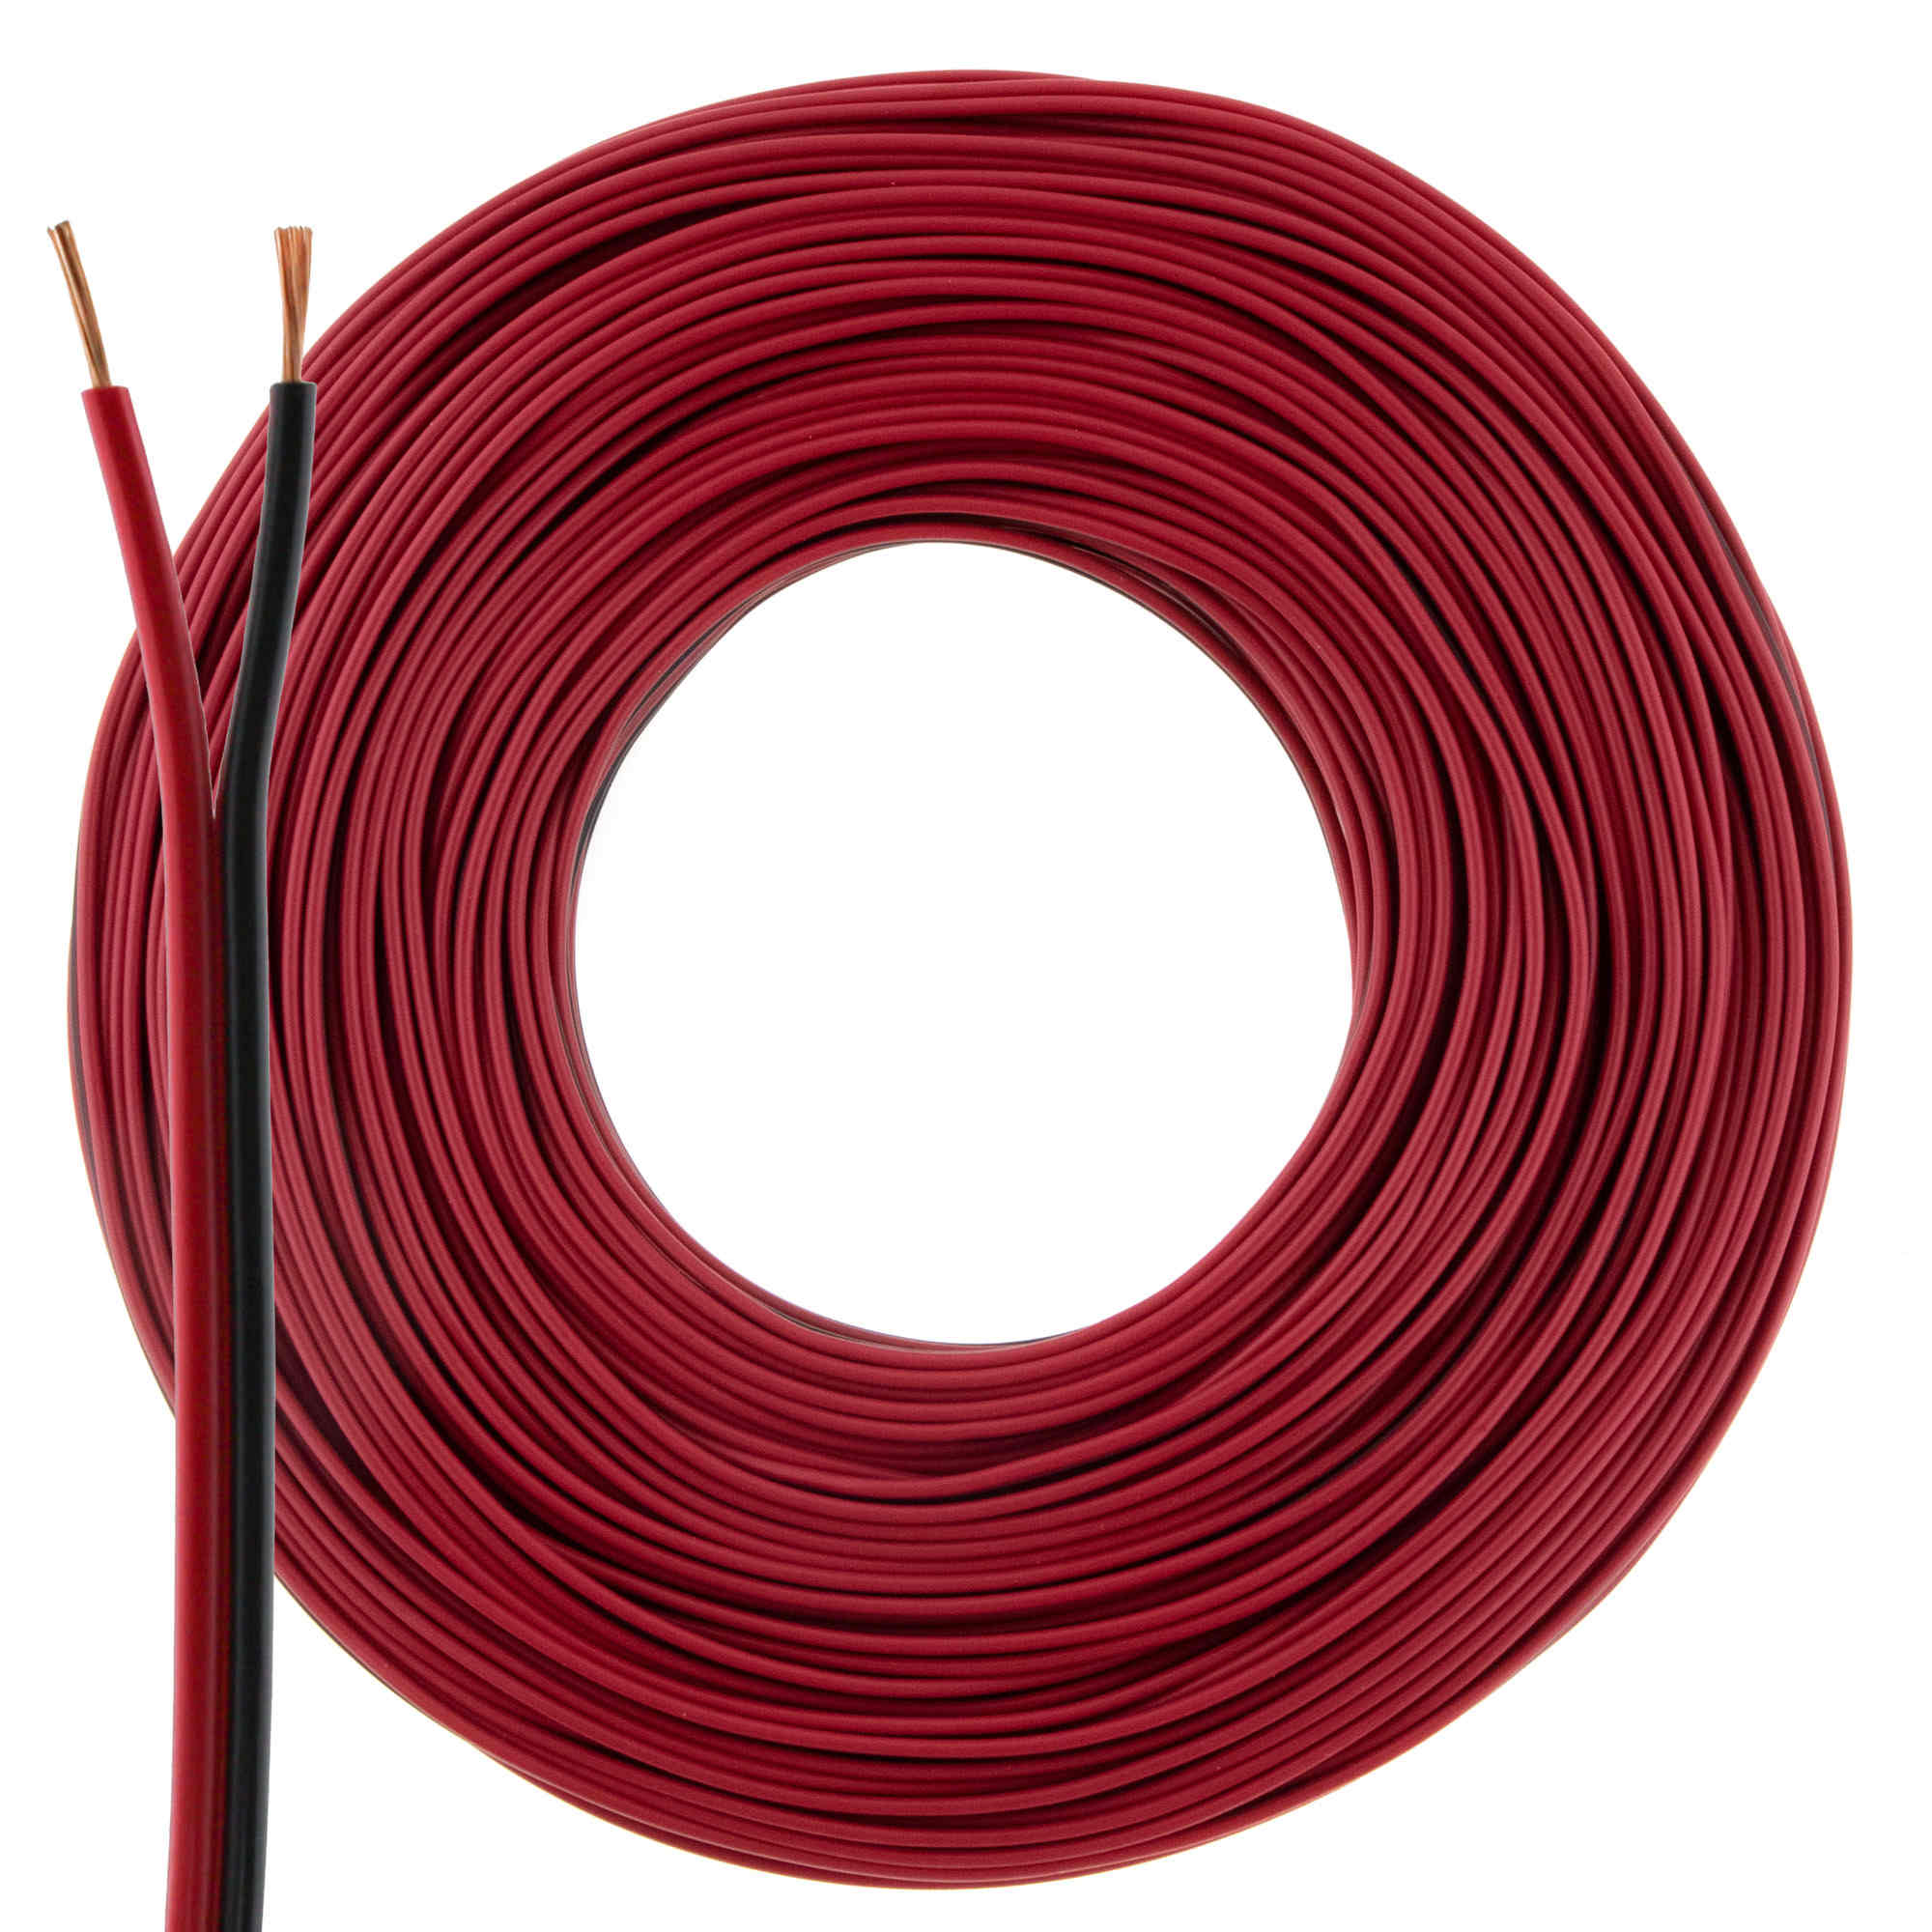 Loudspeaker cable red/black 50m 0.75mm